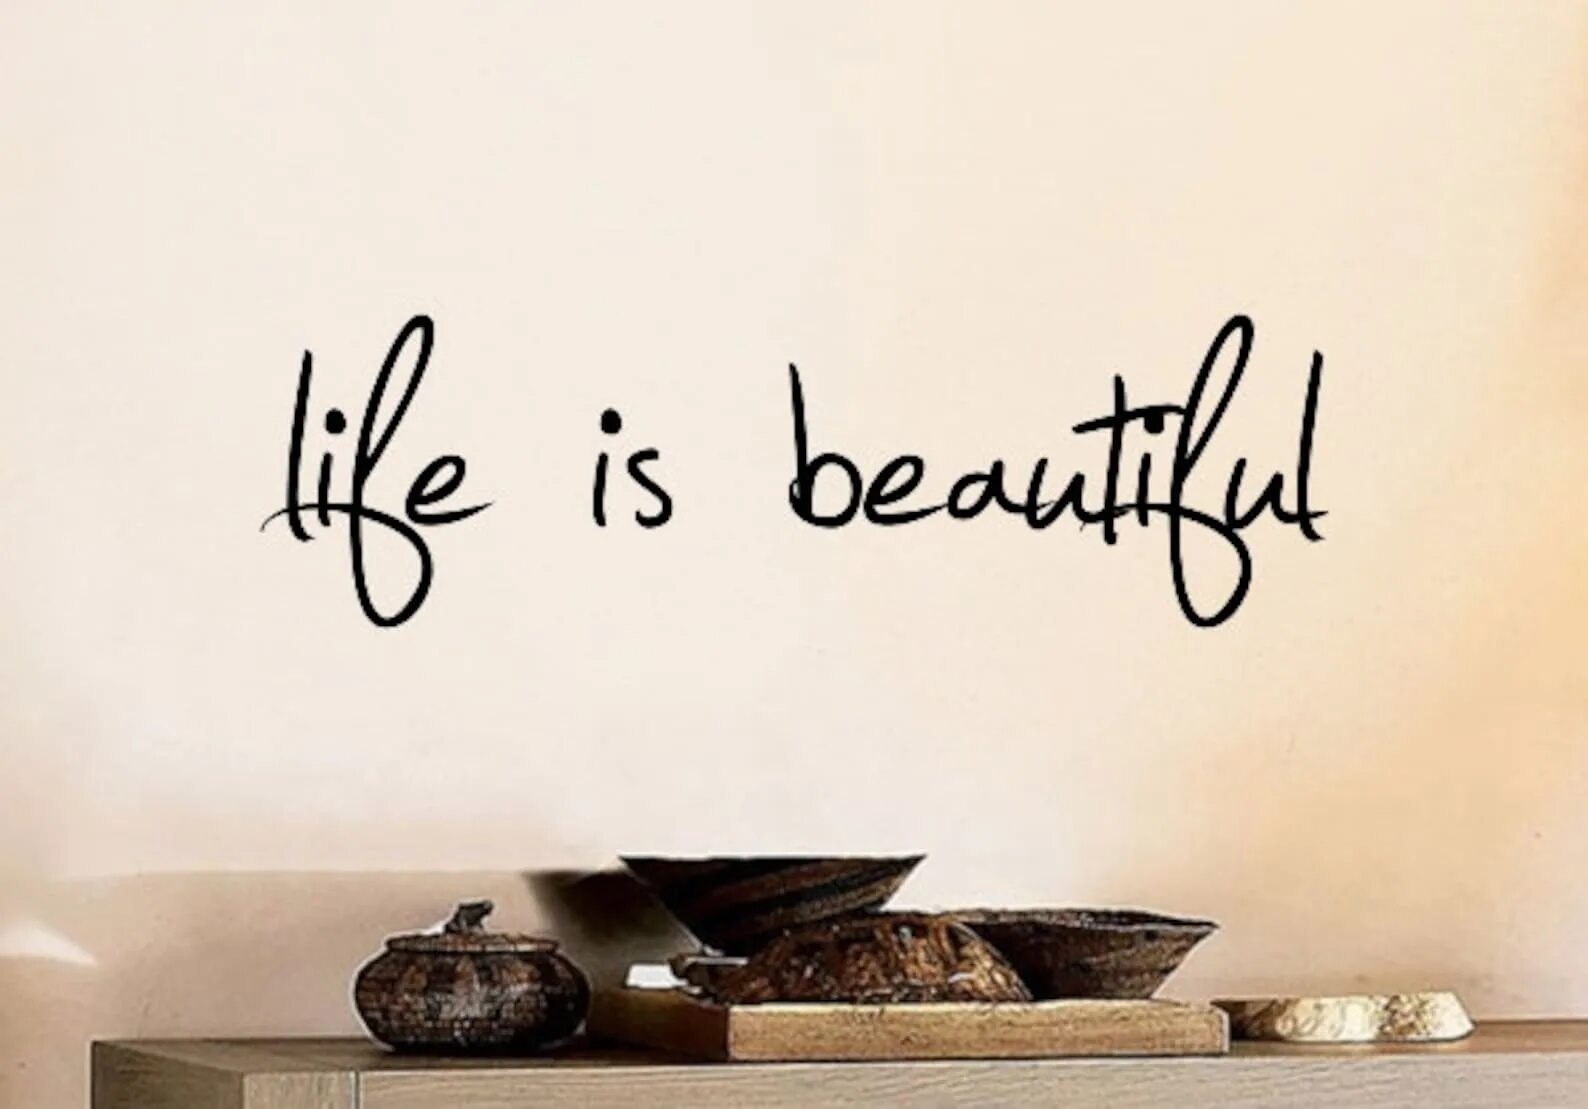 Life надпись. Жизнь прекрасна надпись. Life is beautiful надпись. Life is beautiful красивая надпись.